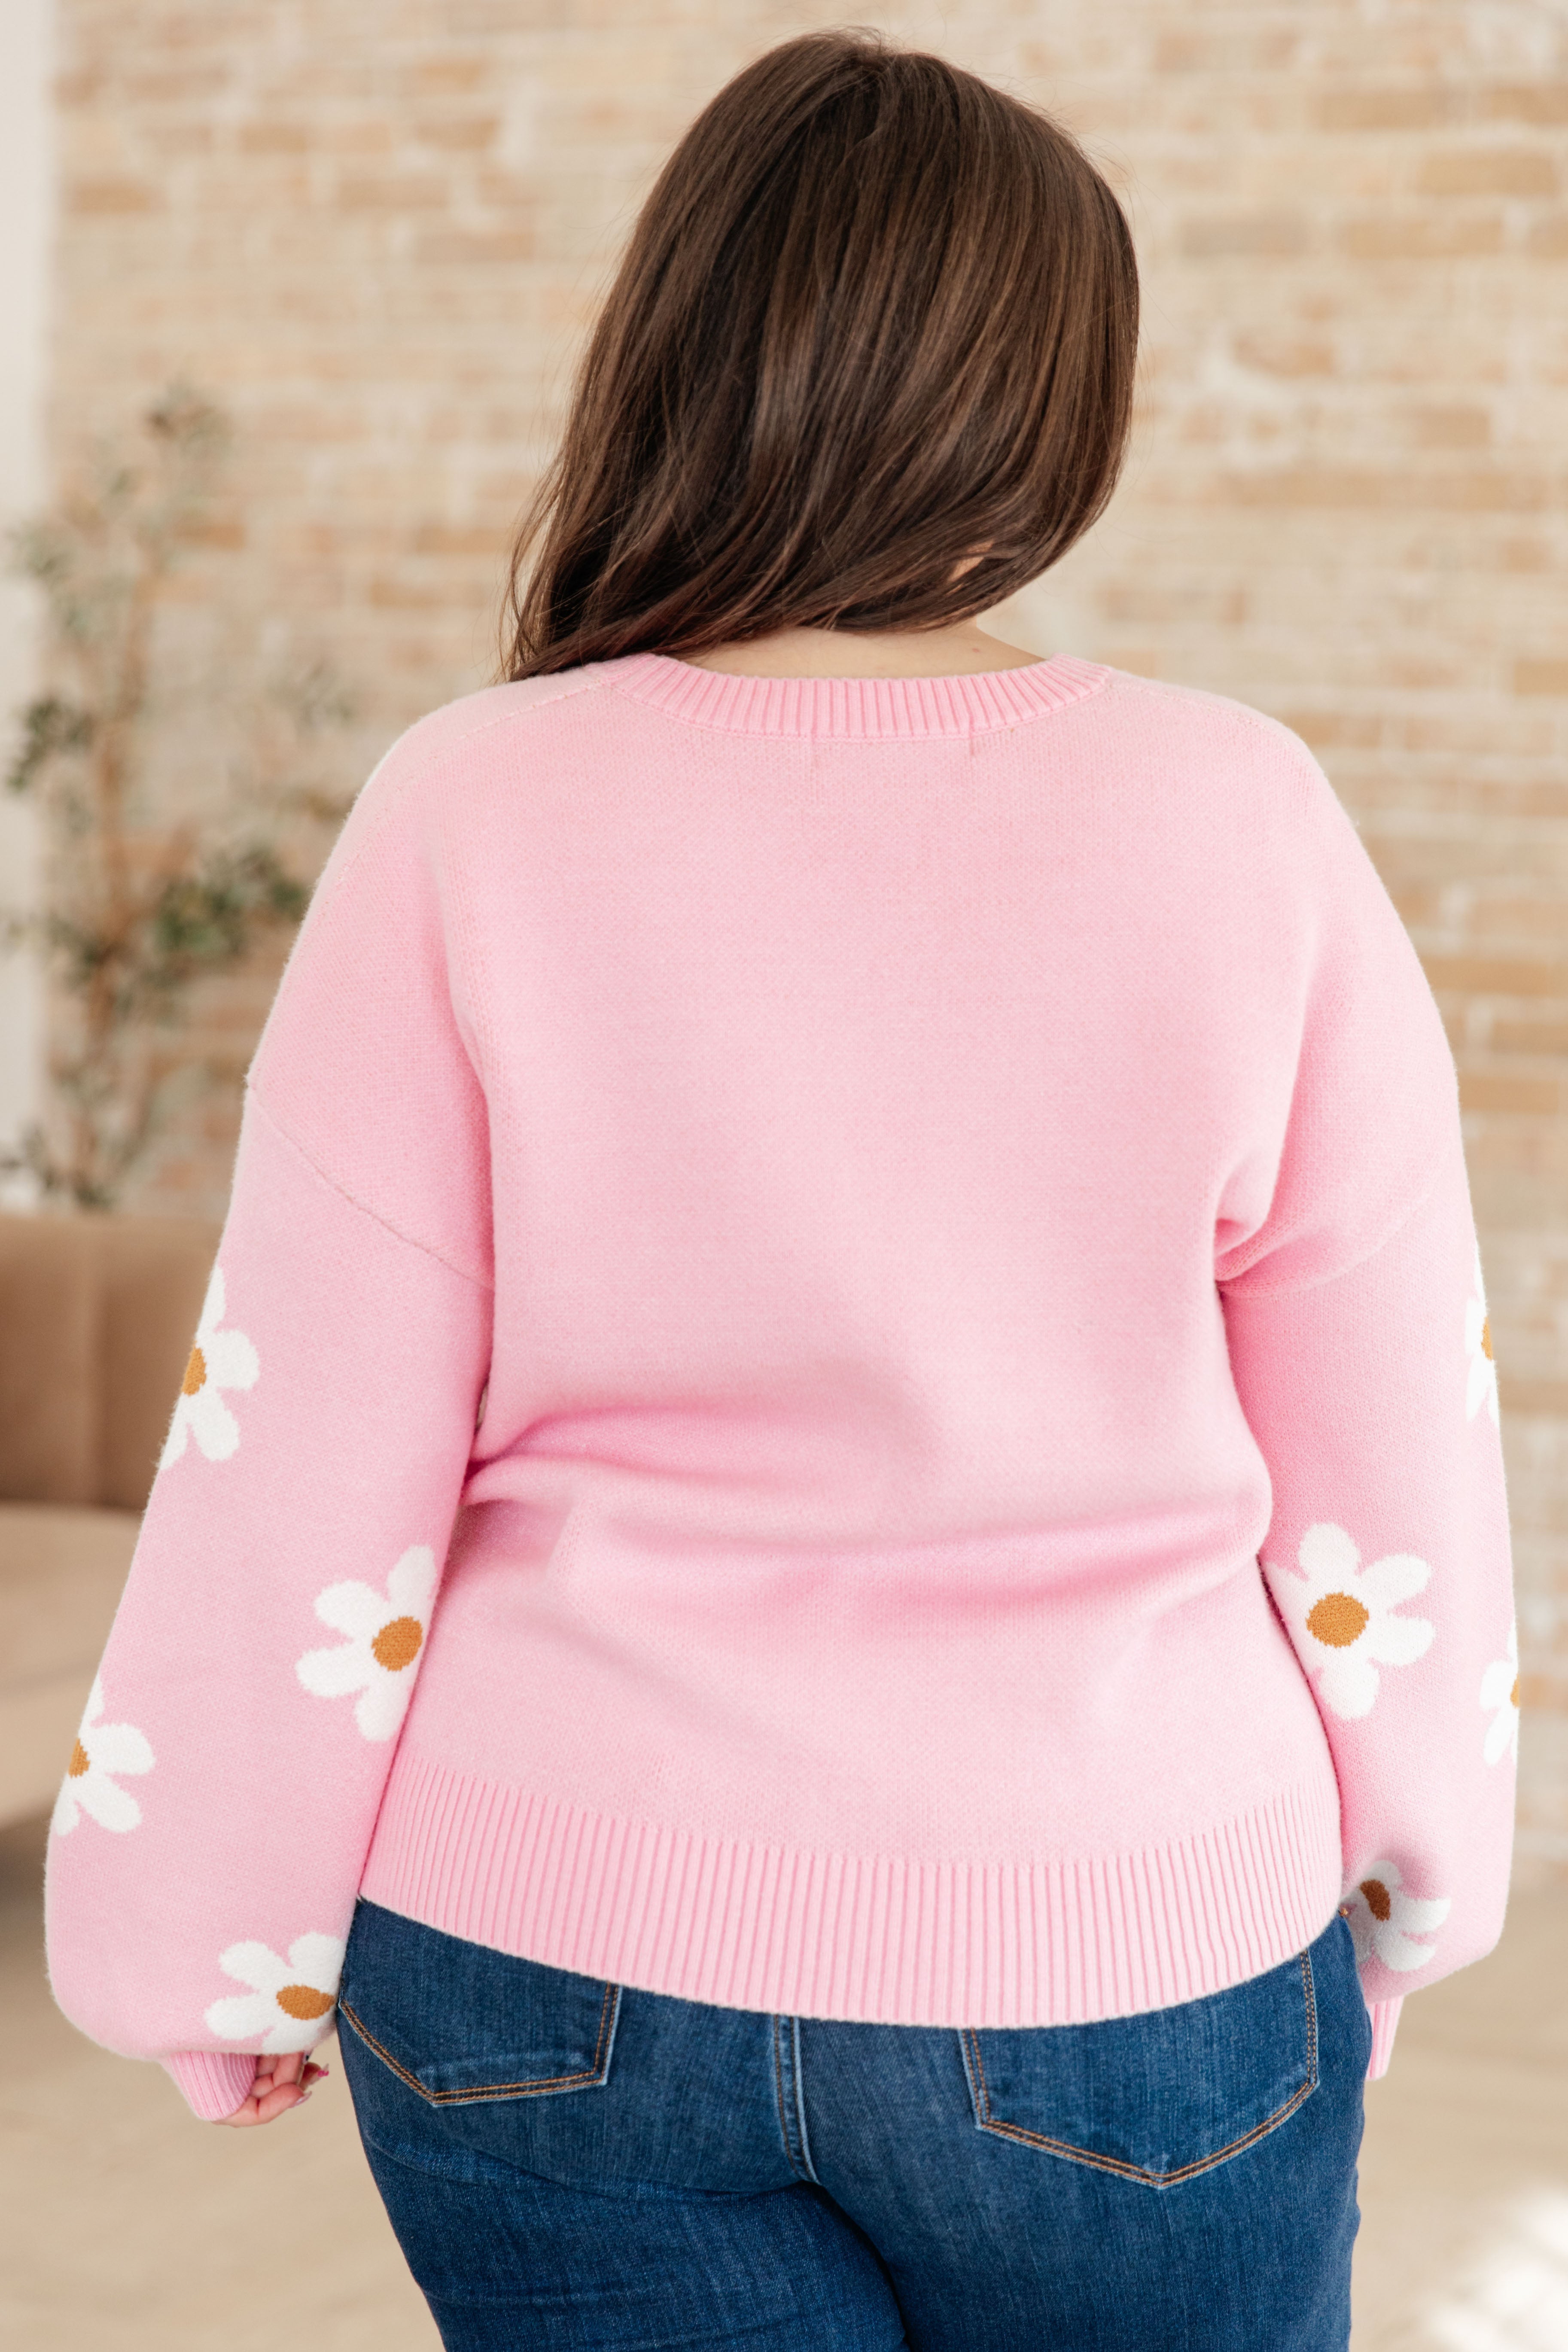 Floreen Floral Sweater